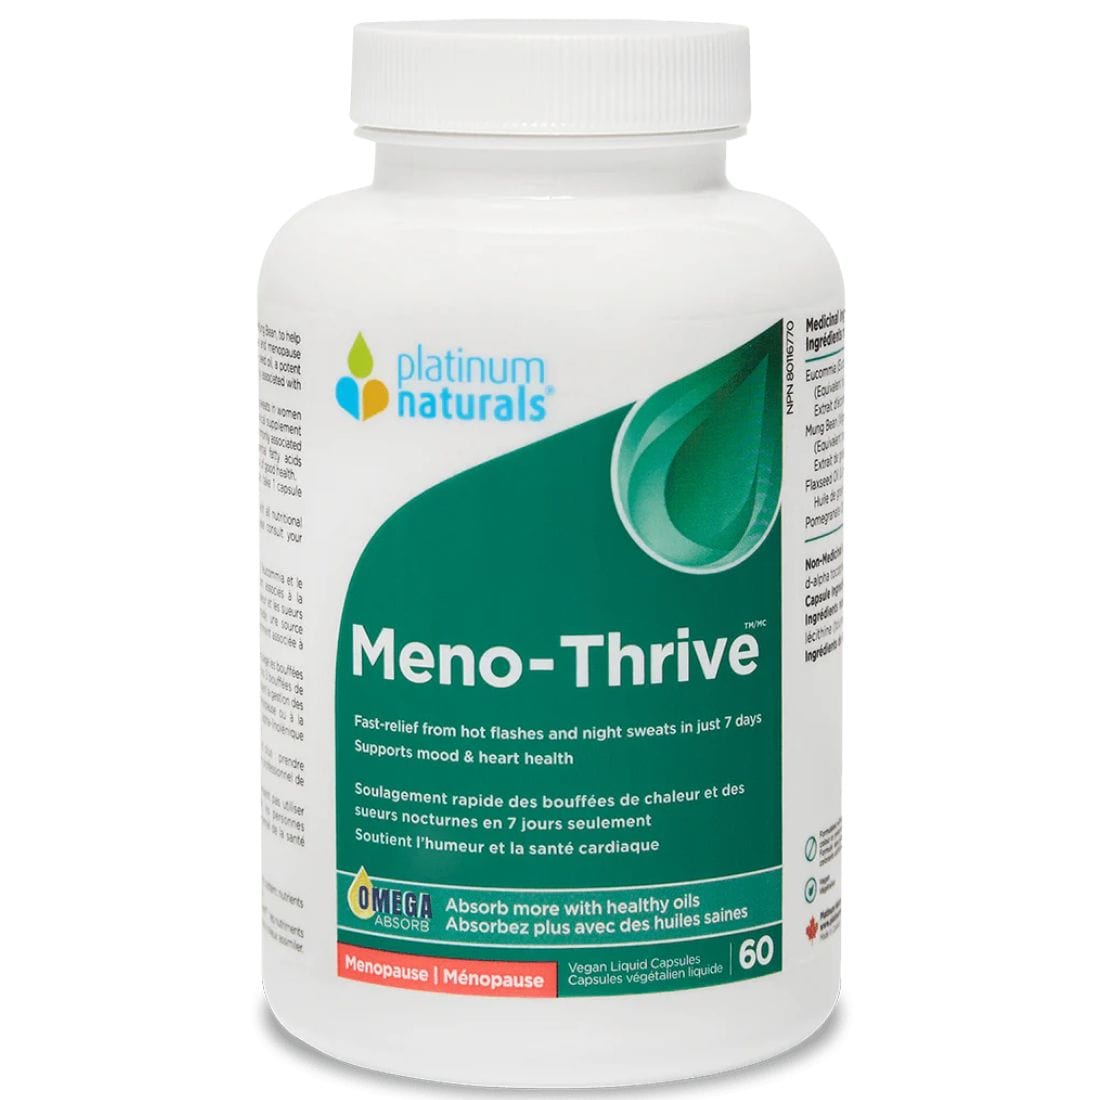 Platinum Naturals Meno-Thrive Menopause Formula